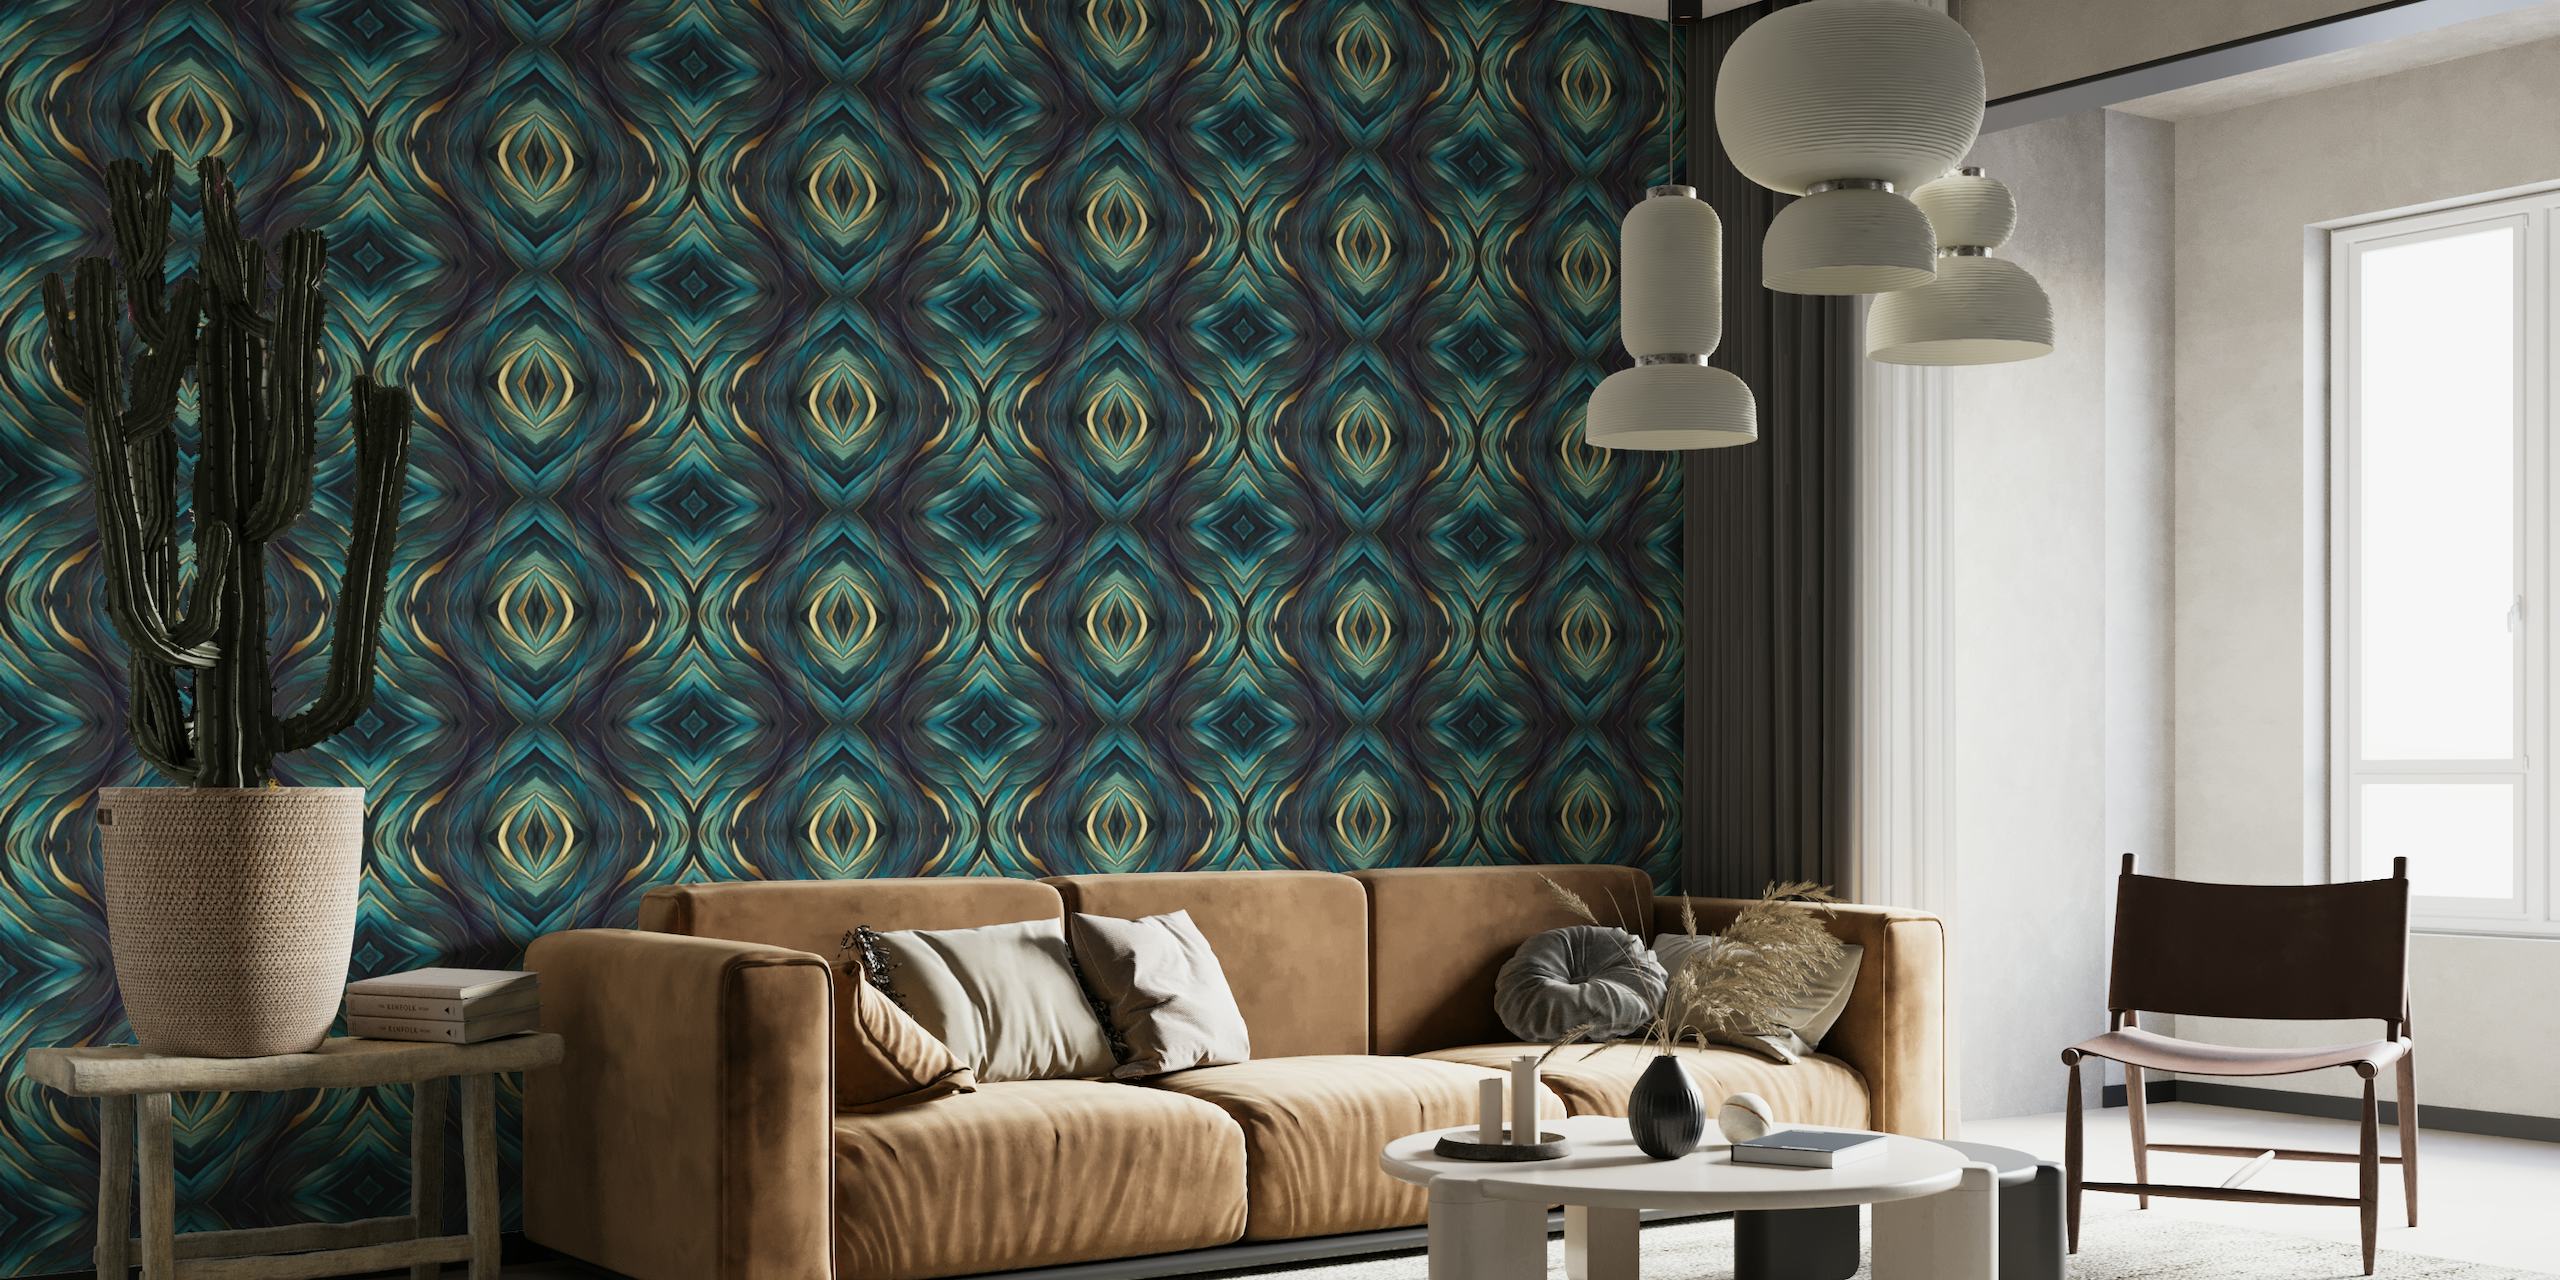 Artisanal Mediterranean Tile Design Teal Blue Gold wallpaper